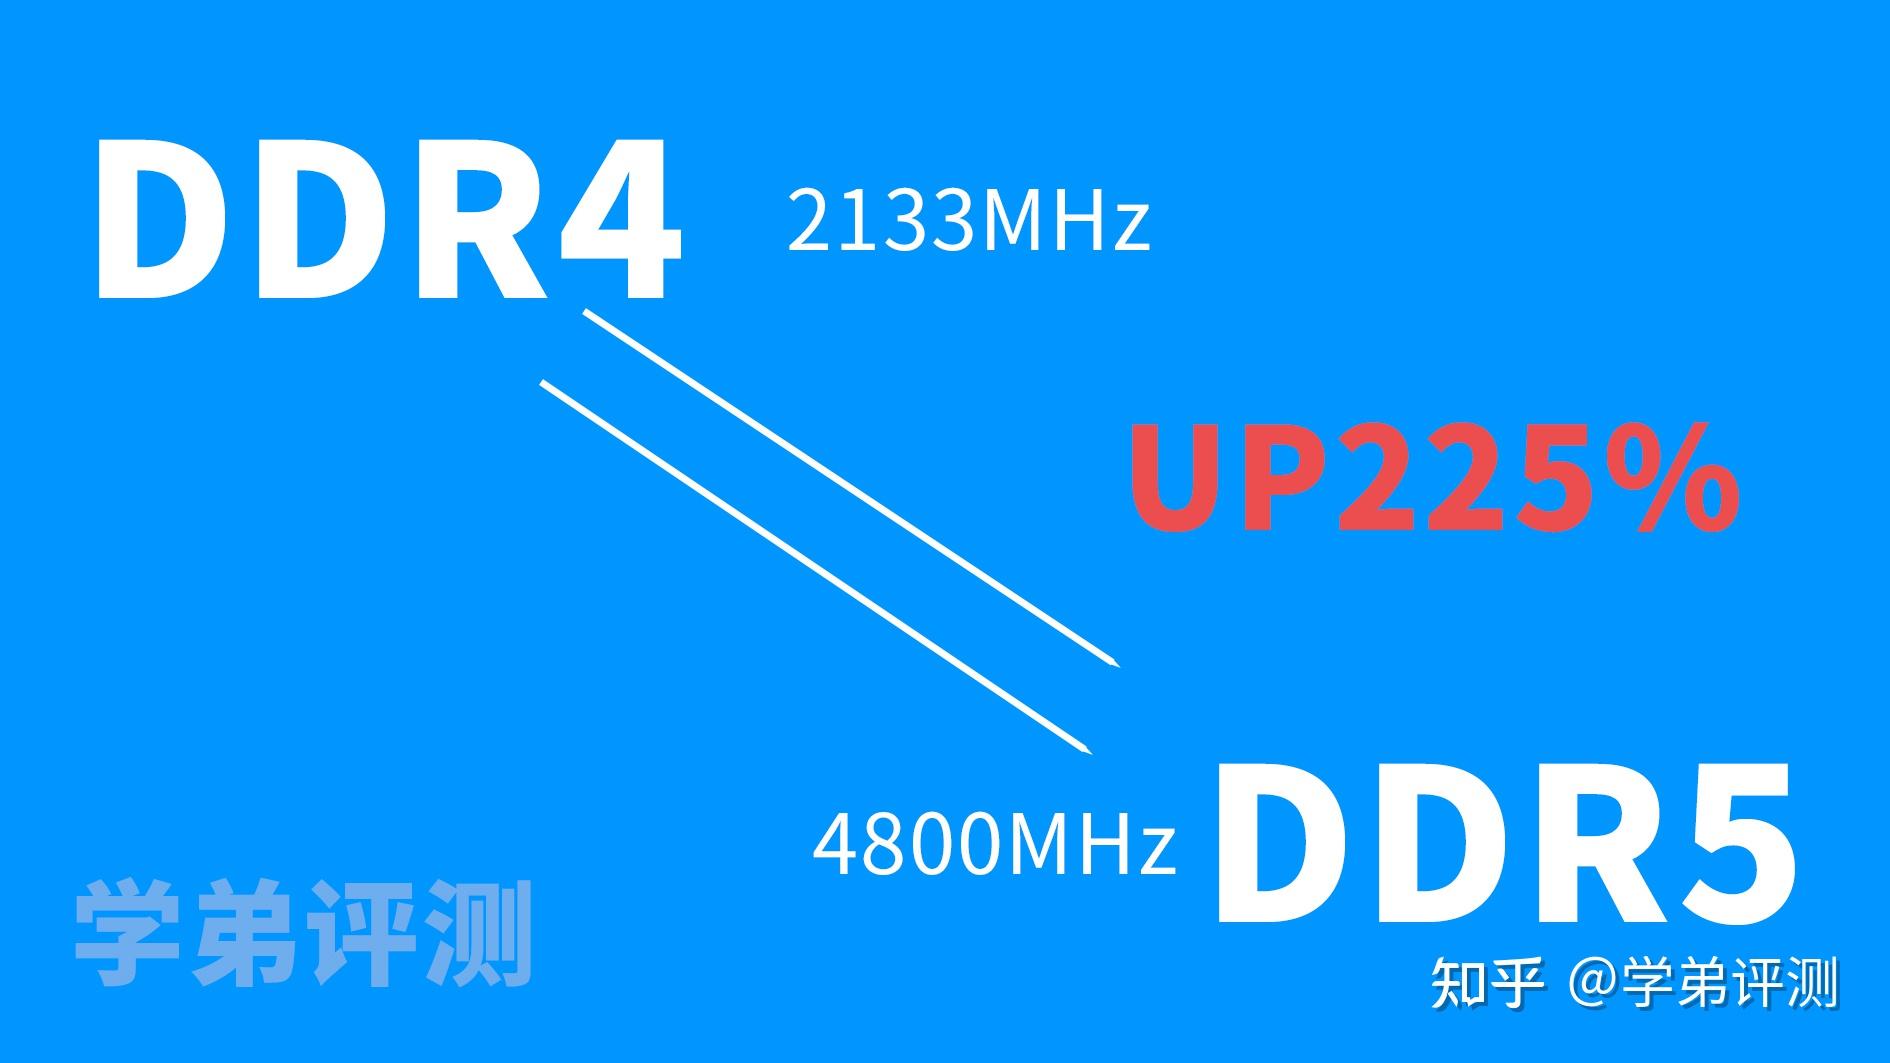 DDR4 2800MHz 内存条：稳定性与频率的权衡，你怎么看？  第6张